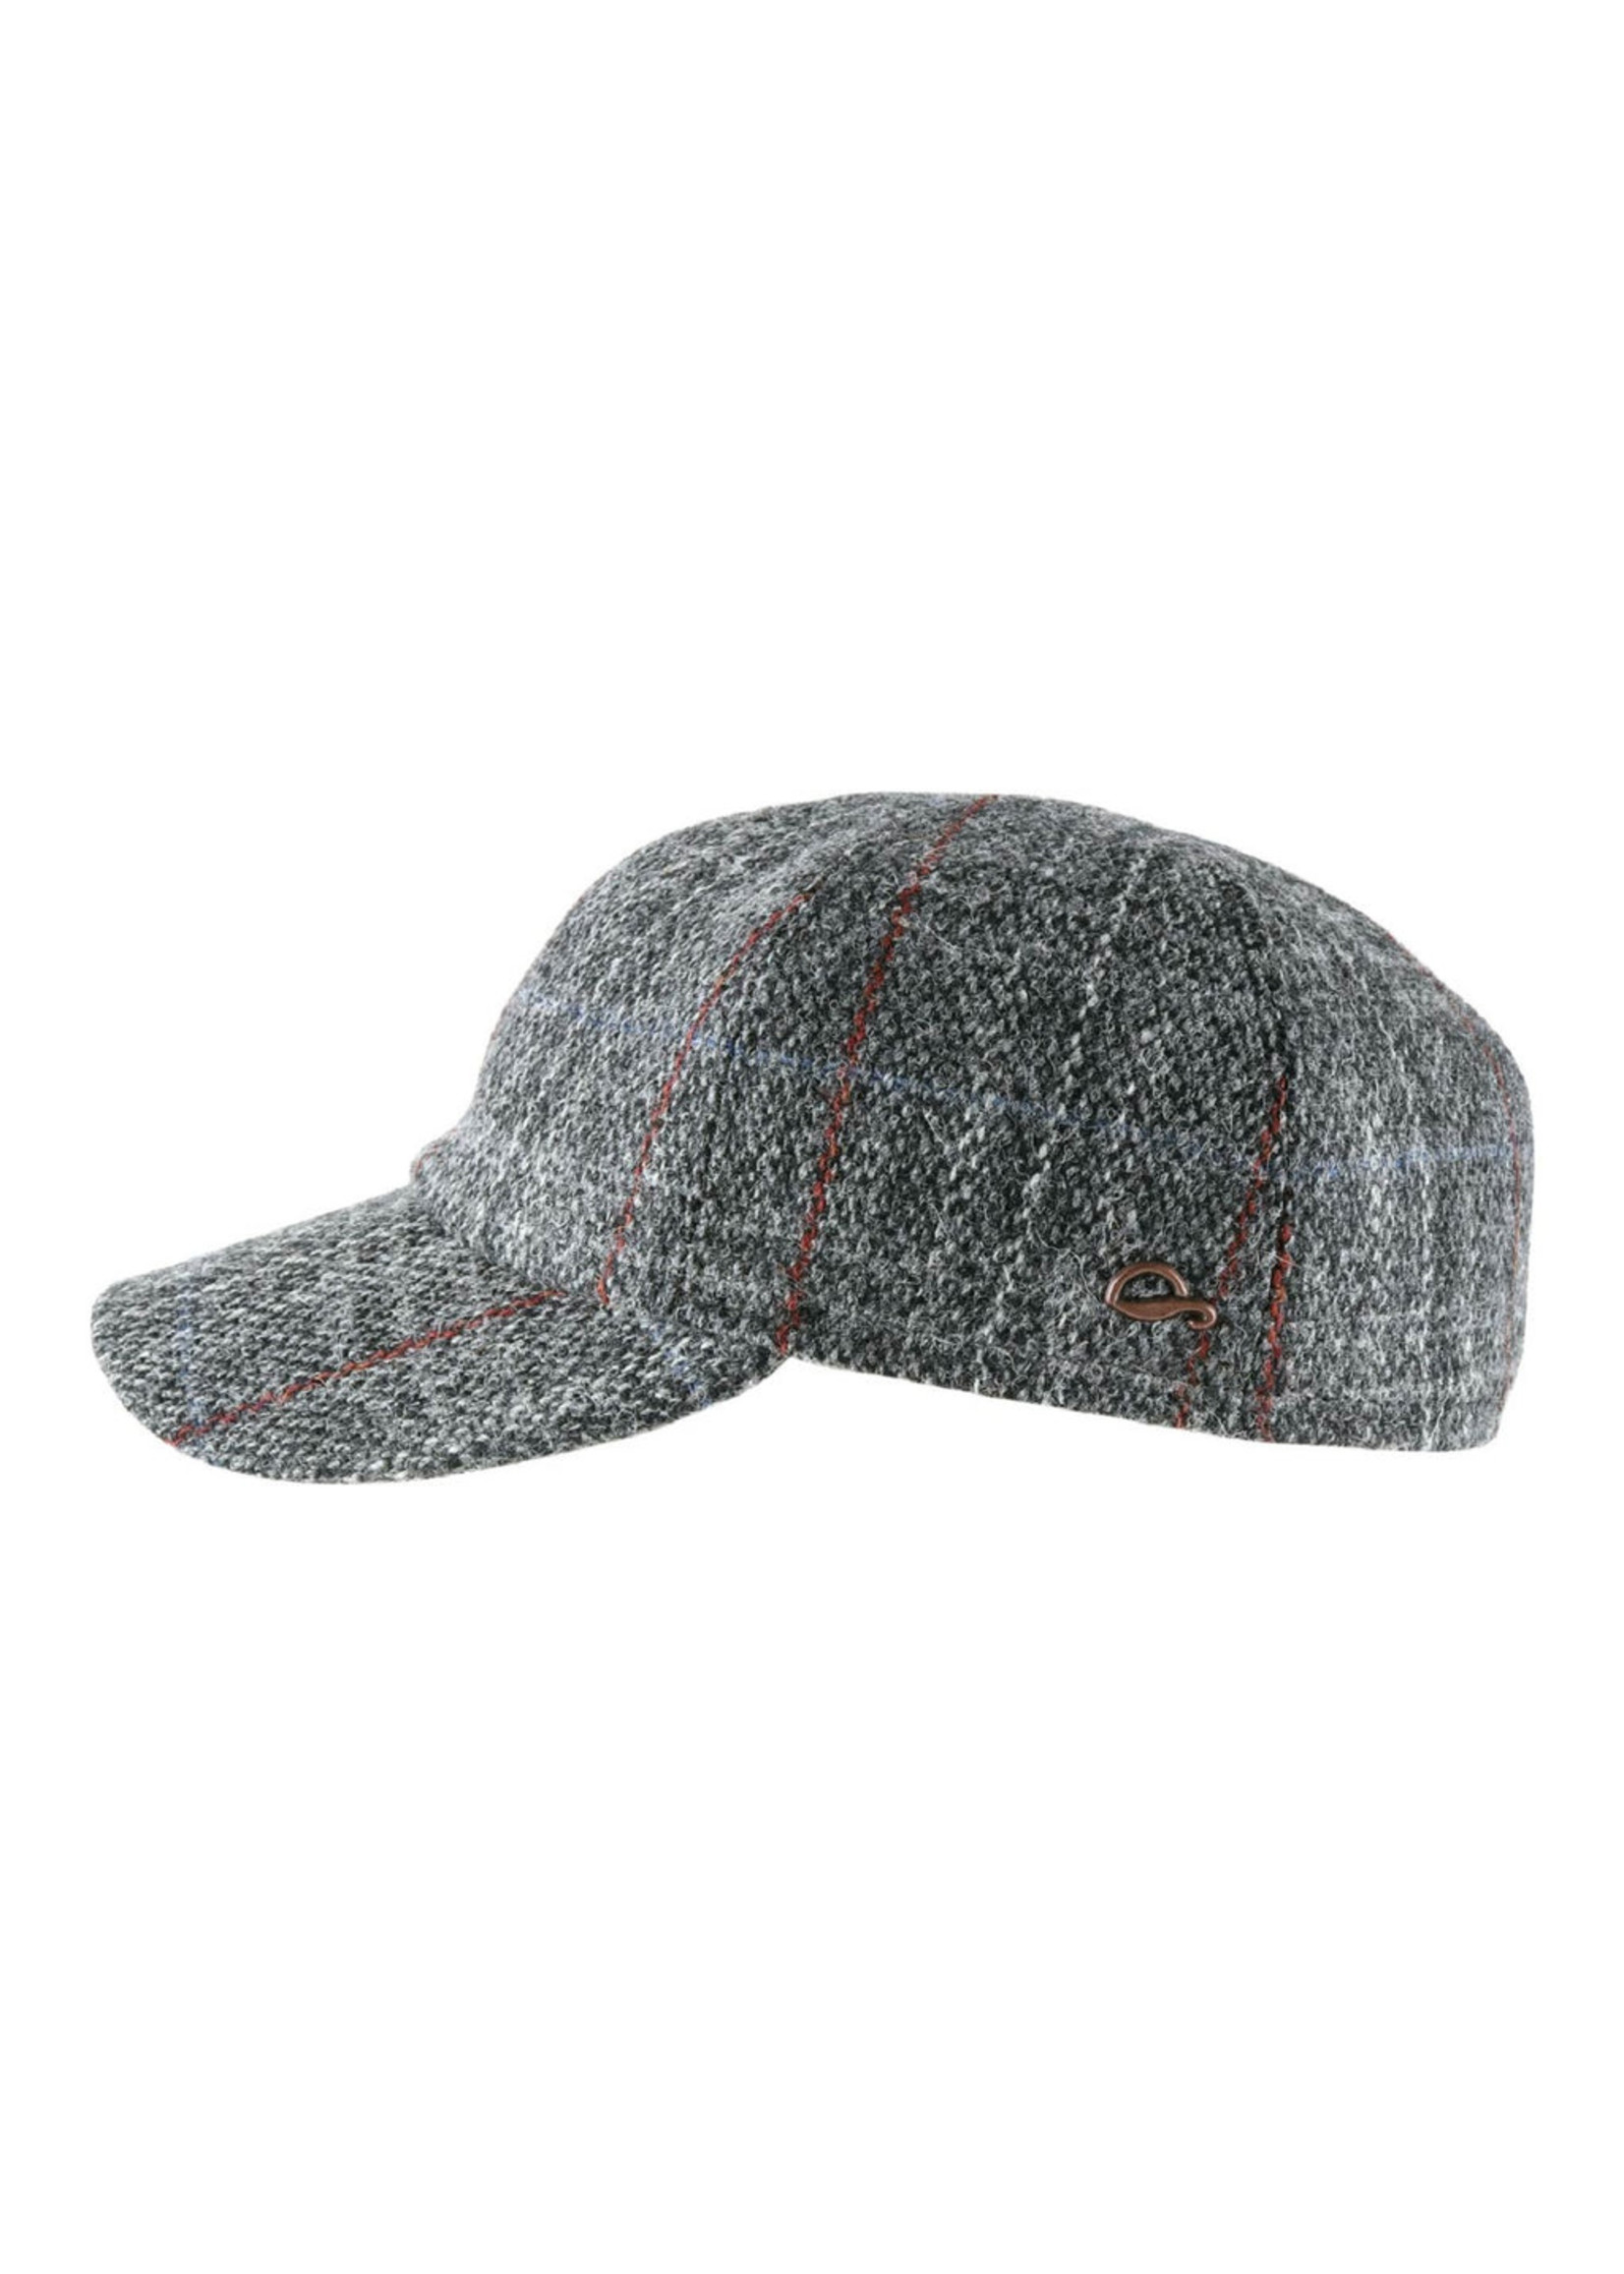 GÖTTMANN Men's Harris Tweed wool baseball cap